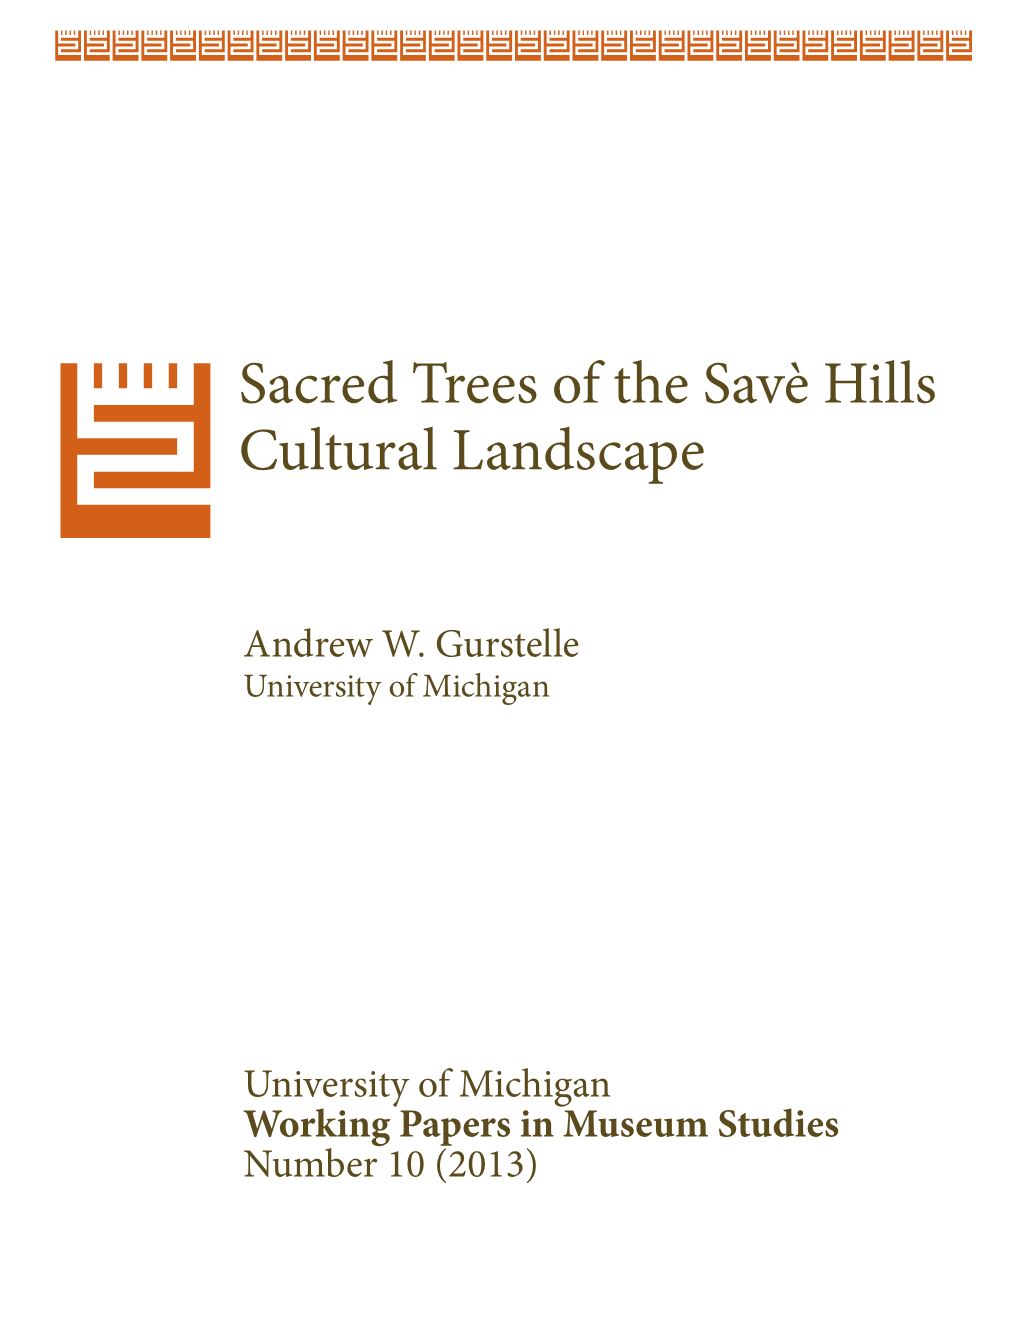 Sacred Trees of the Savè Hills Cultural Landscape